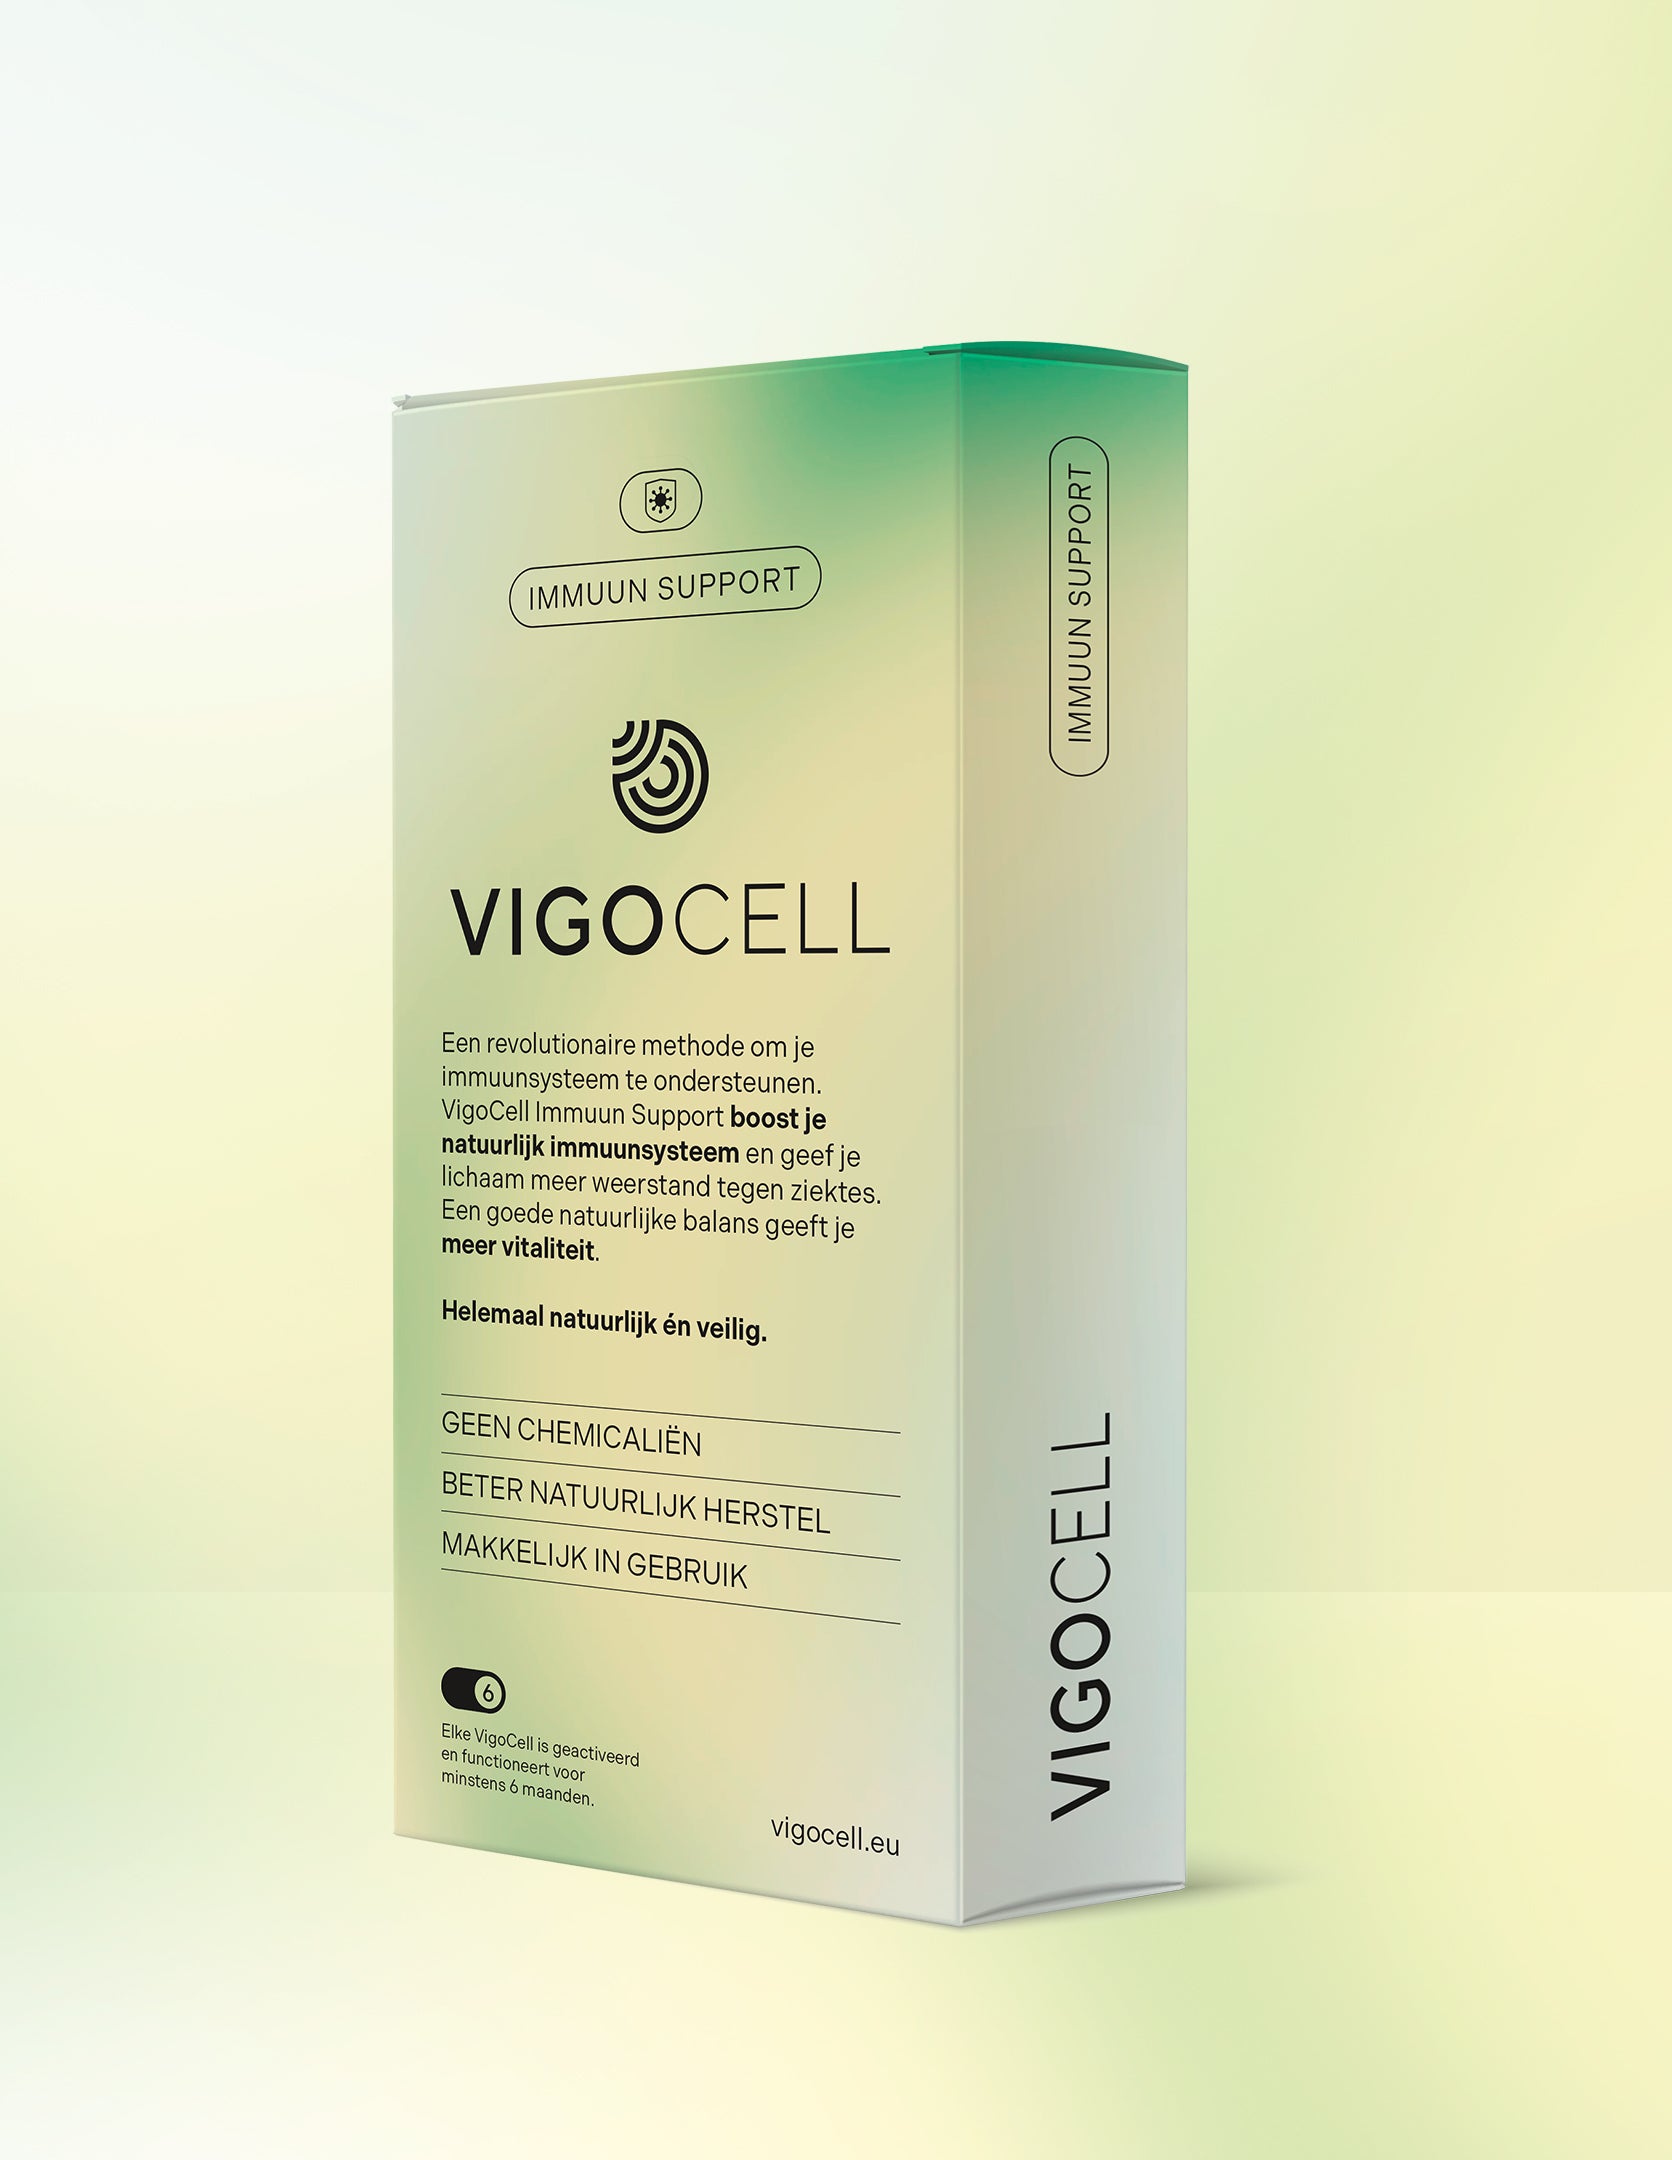 VigoCell Immuun Support productverpakking